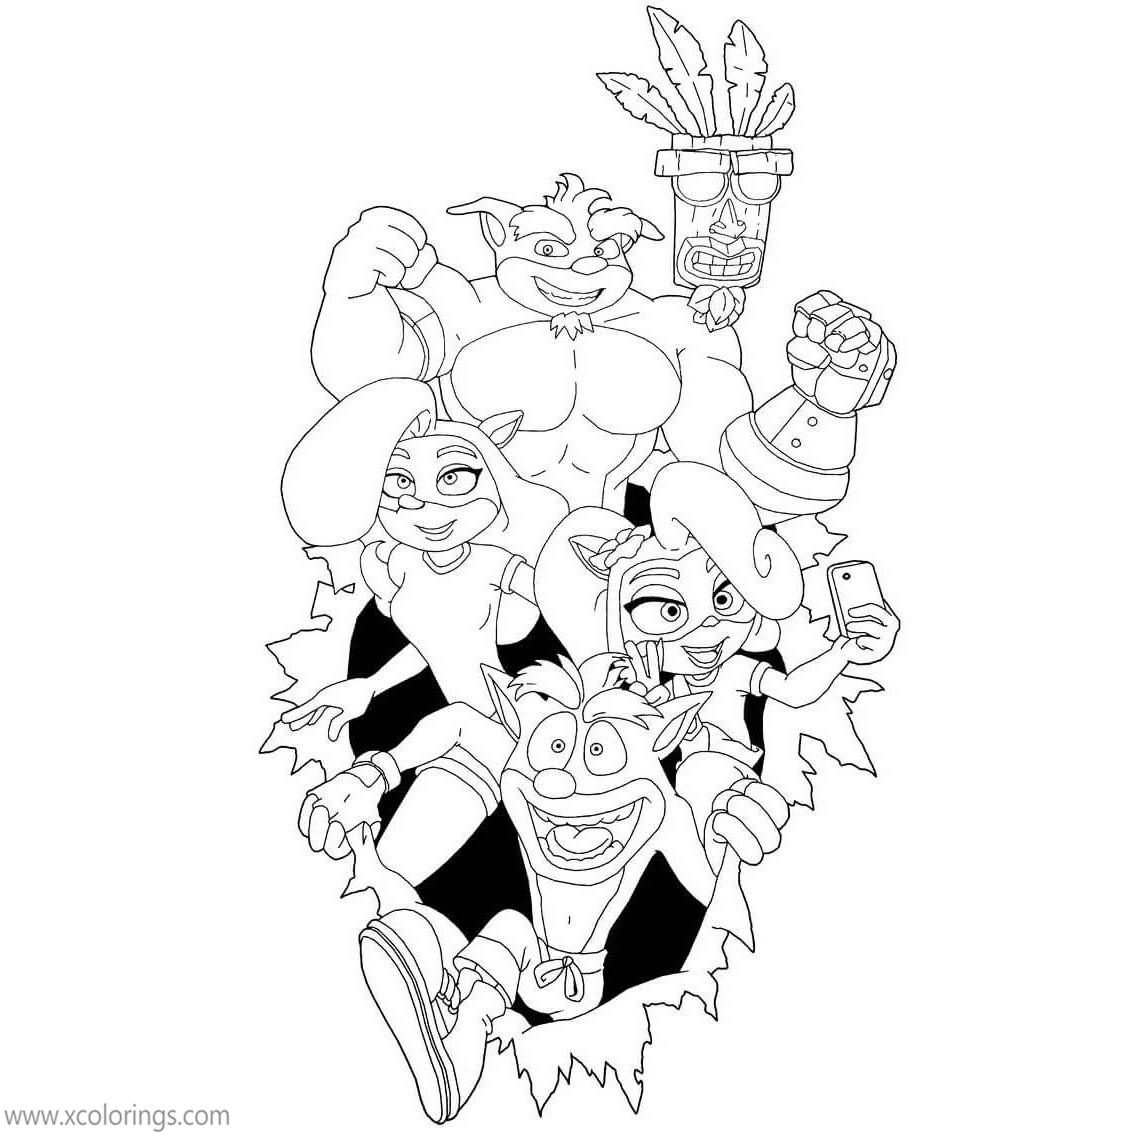 Free Crash Bandicoot Coloring Pages Characters printable